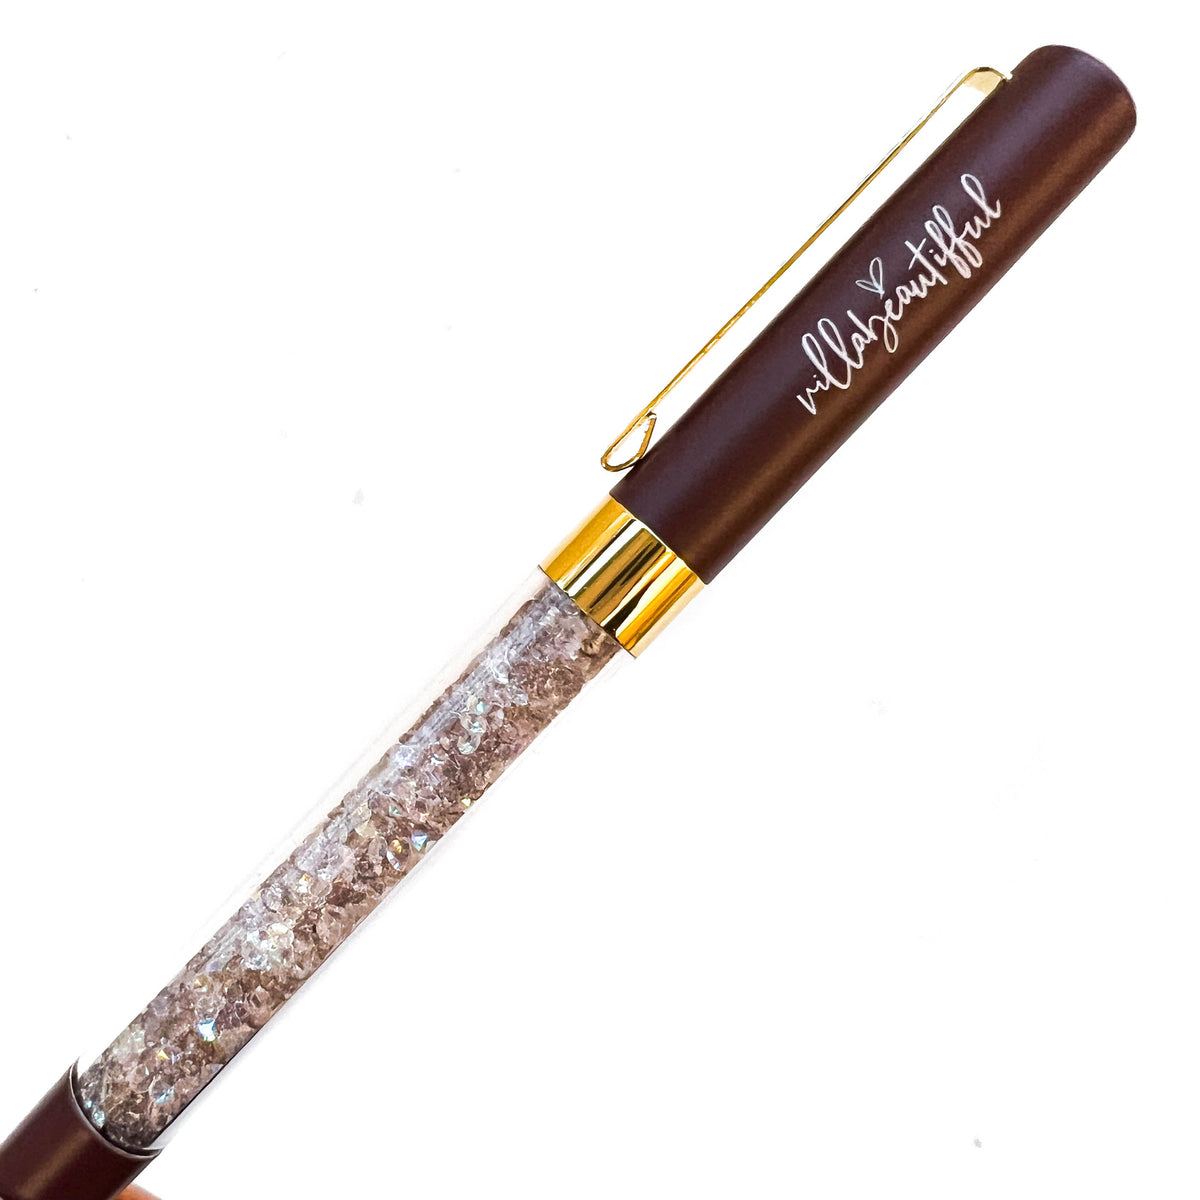 Artisan Imperfect Crystal VBPen | limited kit pen